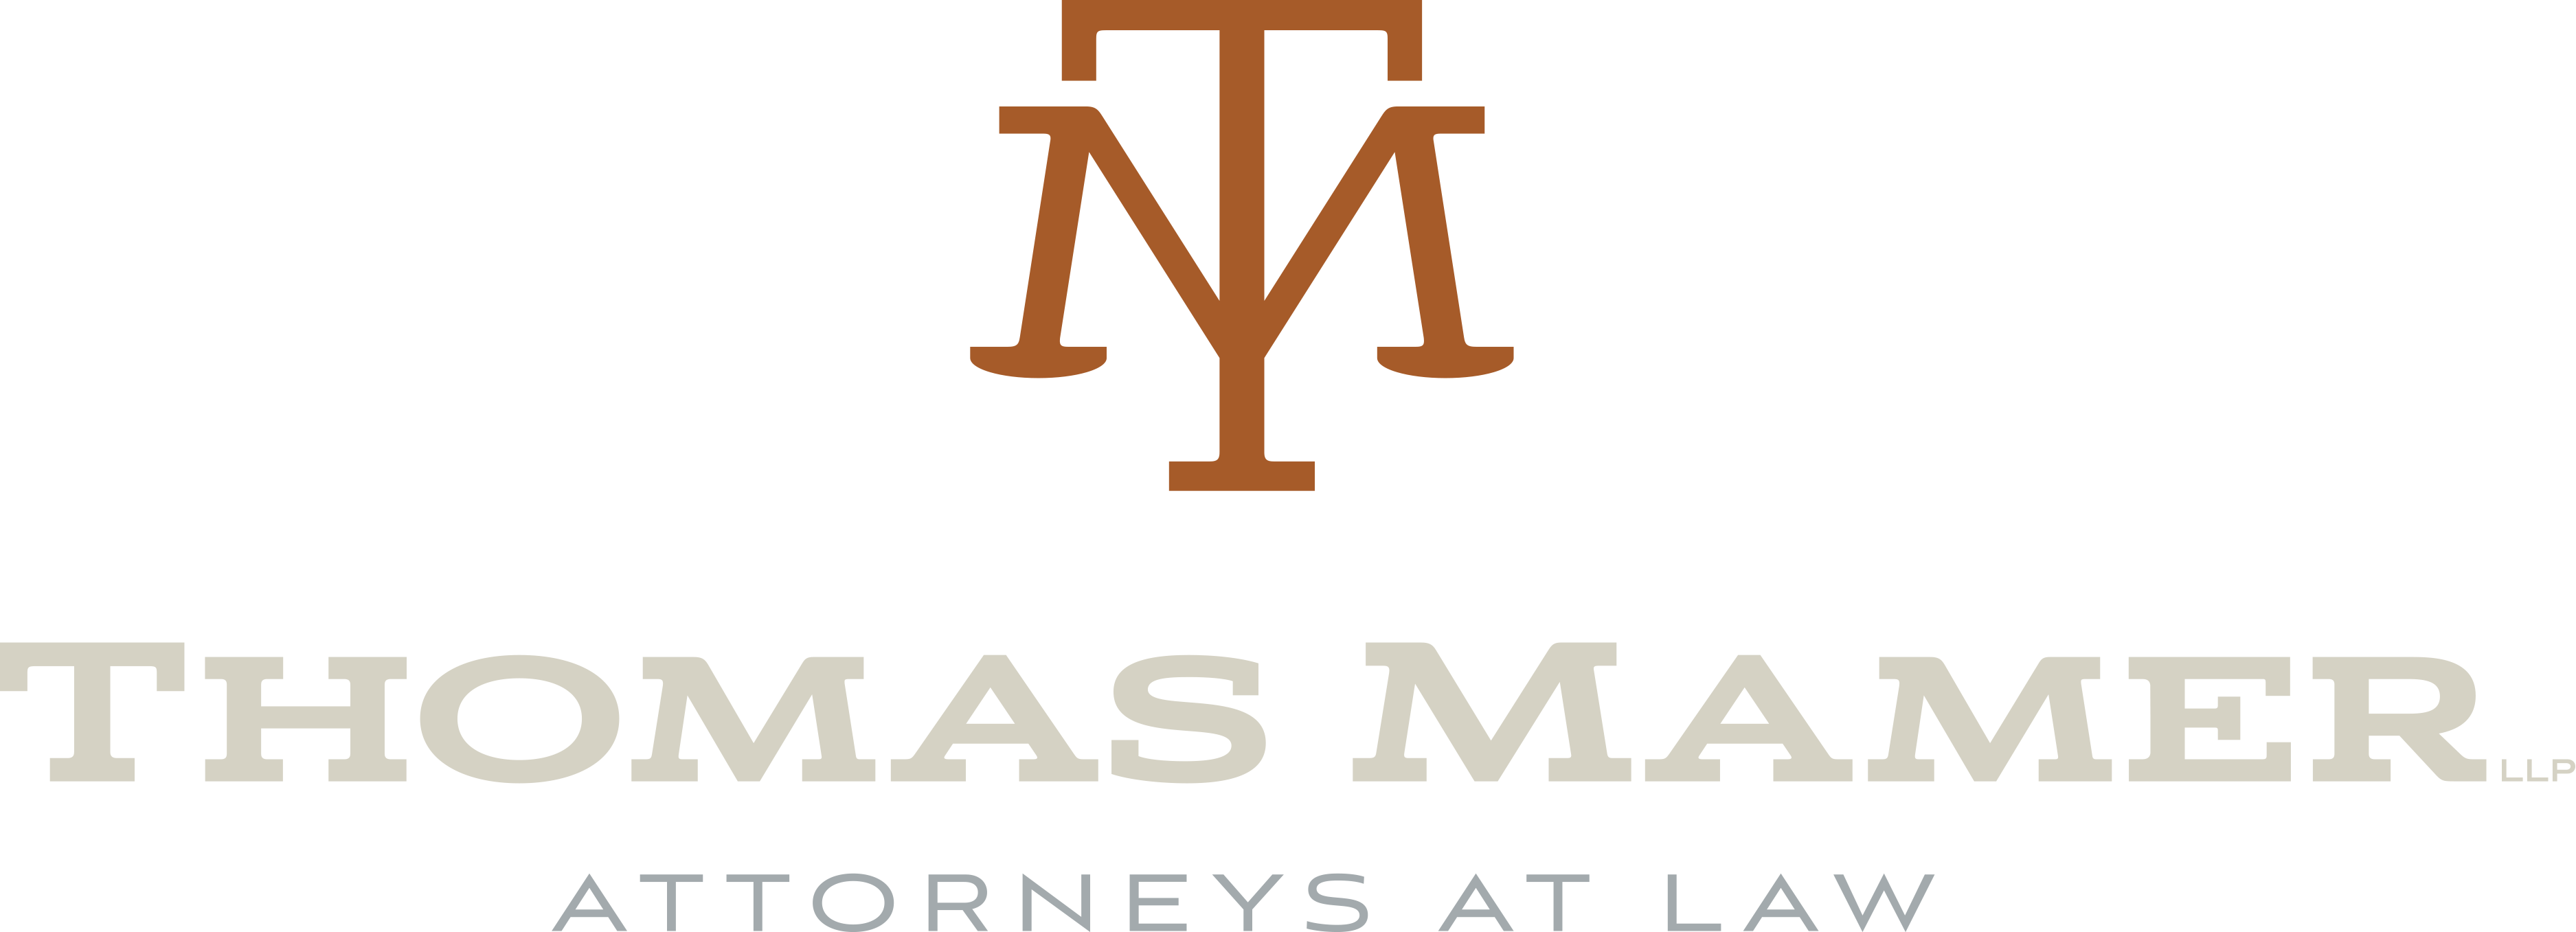 Thomas Mamer - Attorneys at Law - New Branding